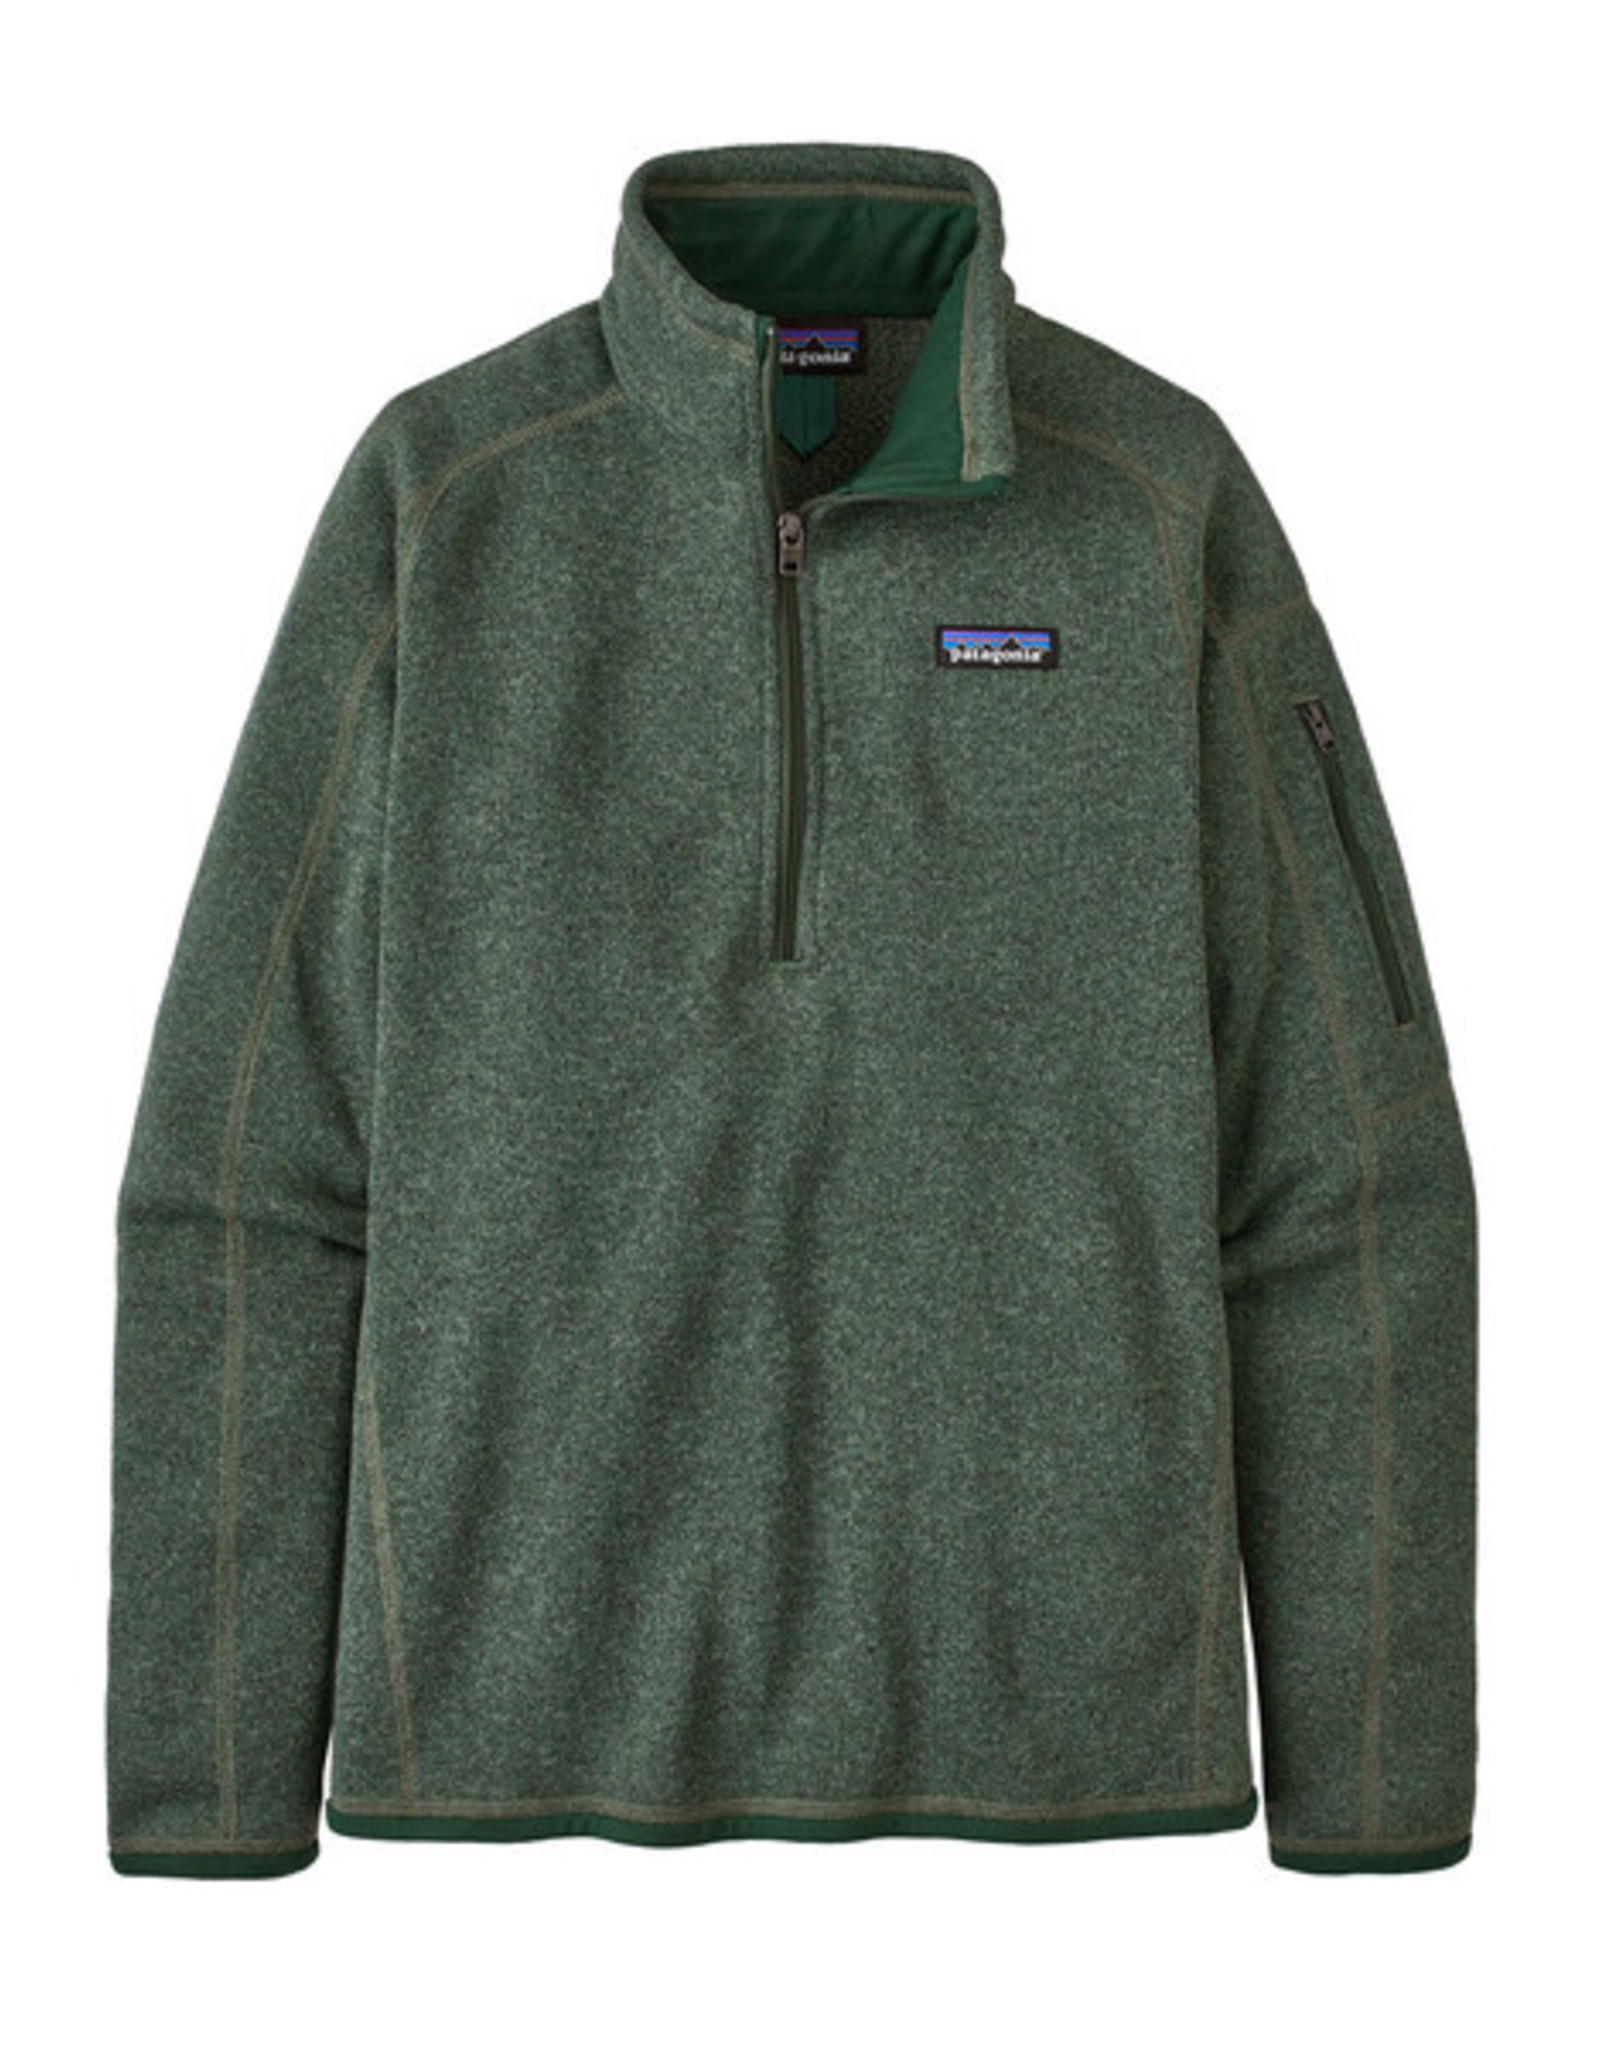 Patagonia - W's Better Sweater 1/4 Zip - Hemlock Green